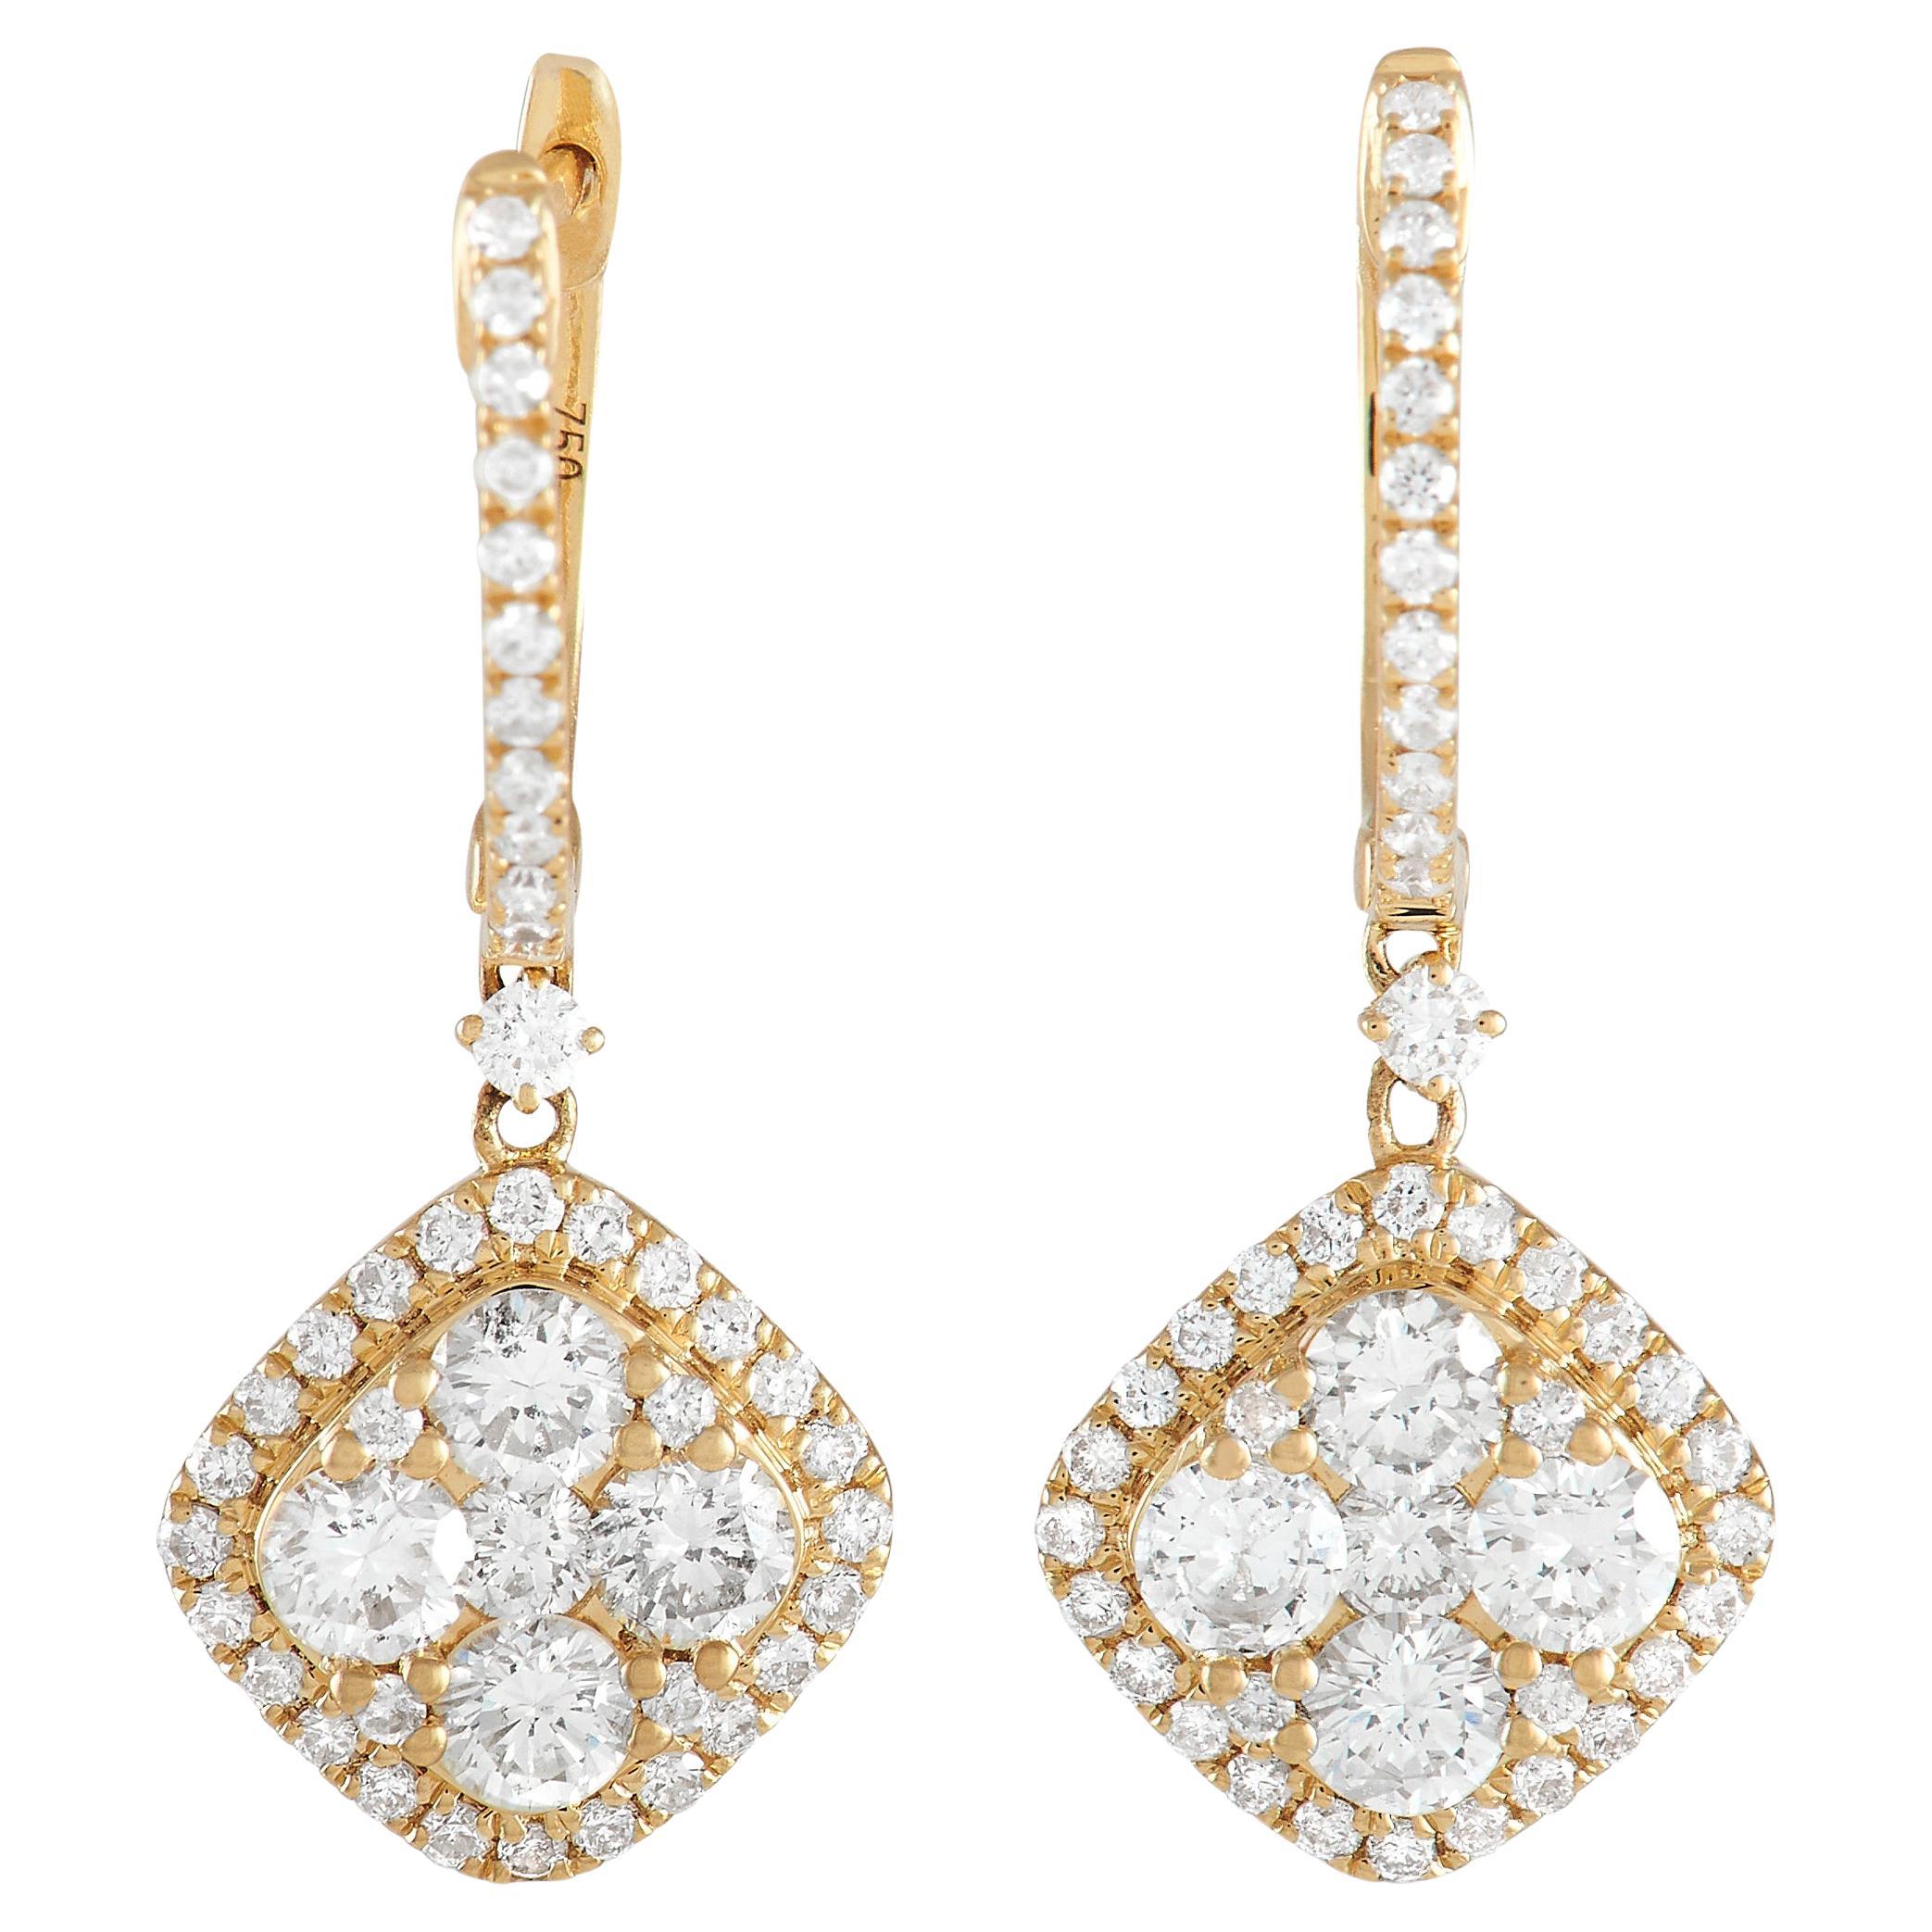 LB Exclusive 18K Yellow Gold 1.77ct Diamond Earrings